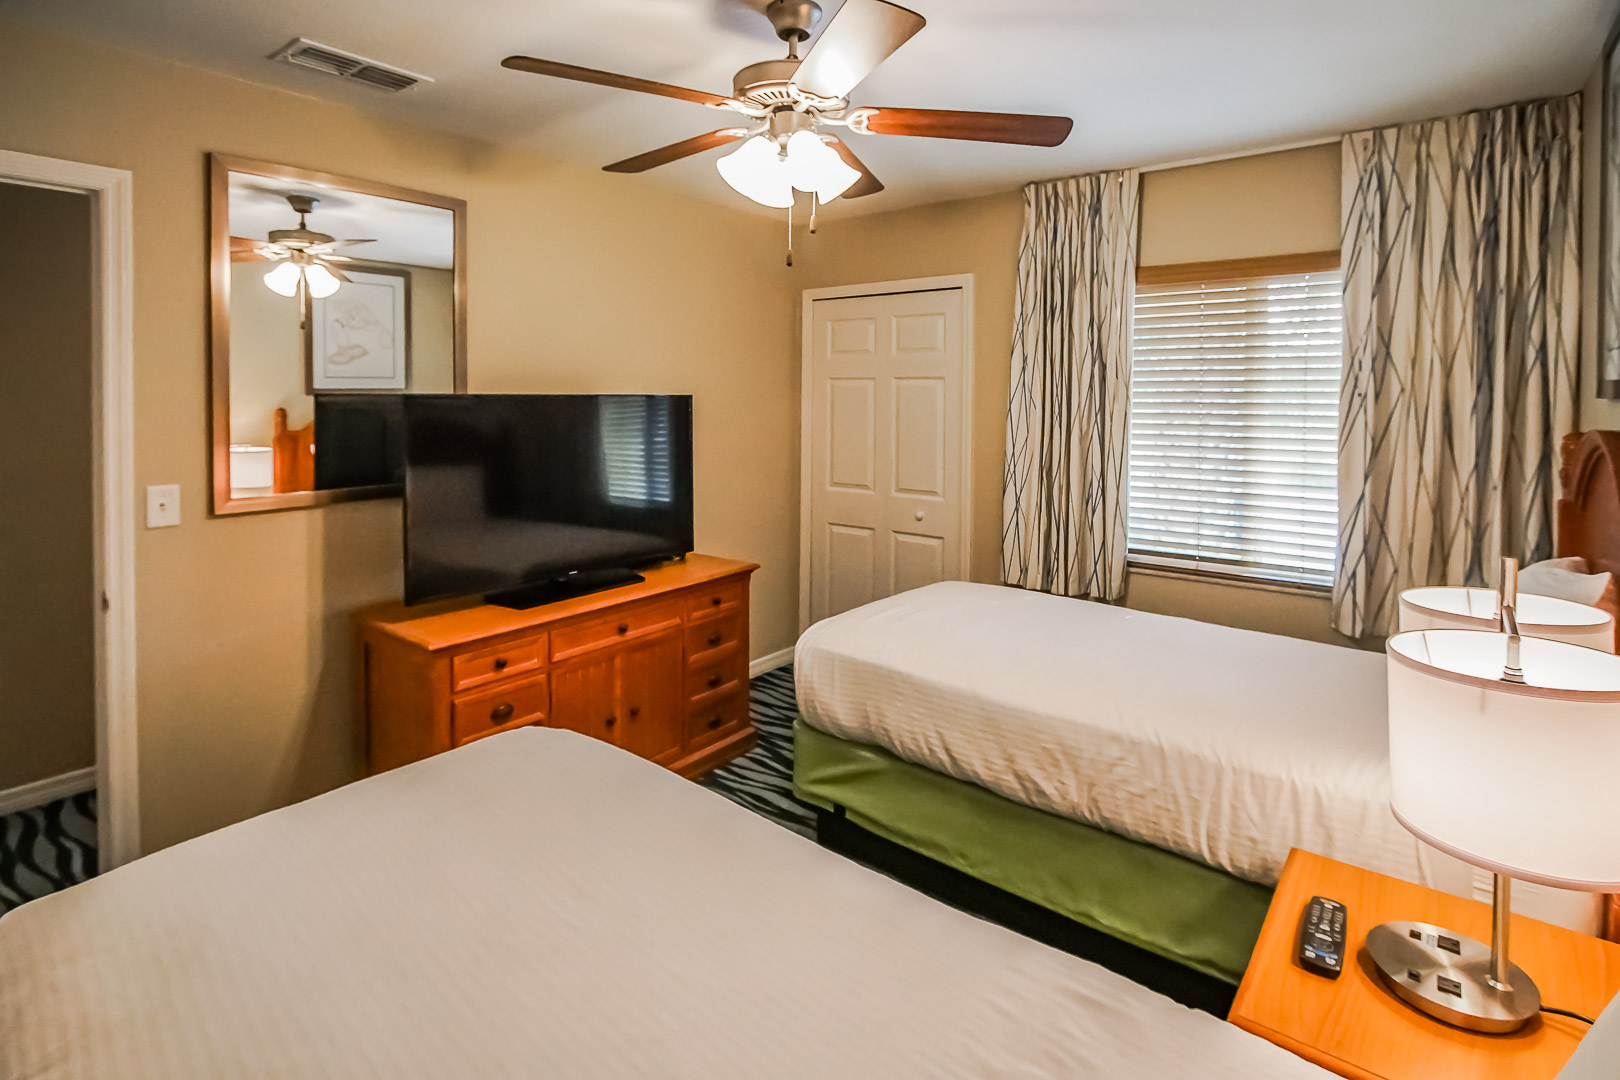 A spacious 2 bedroom unit at VRI's Fantasy World Resort in Florida.